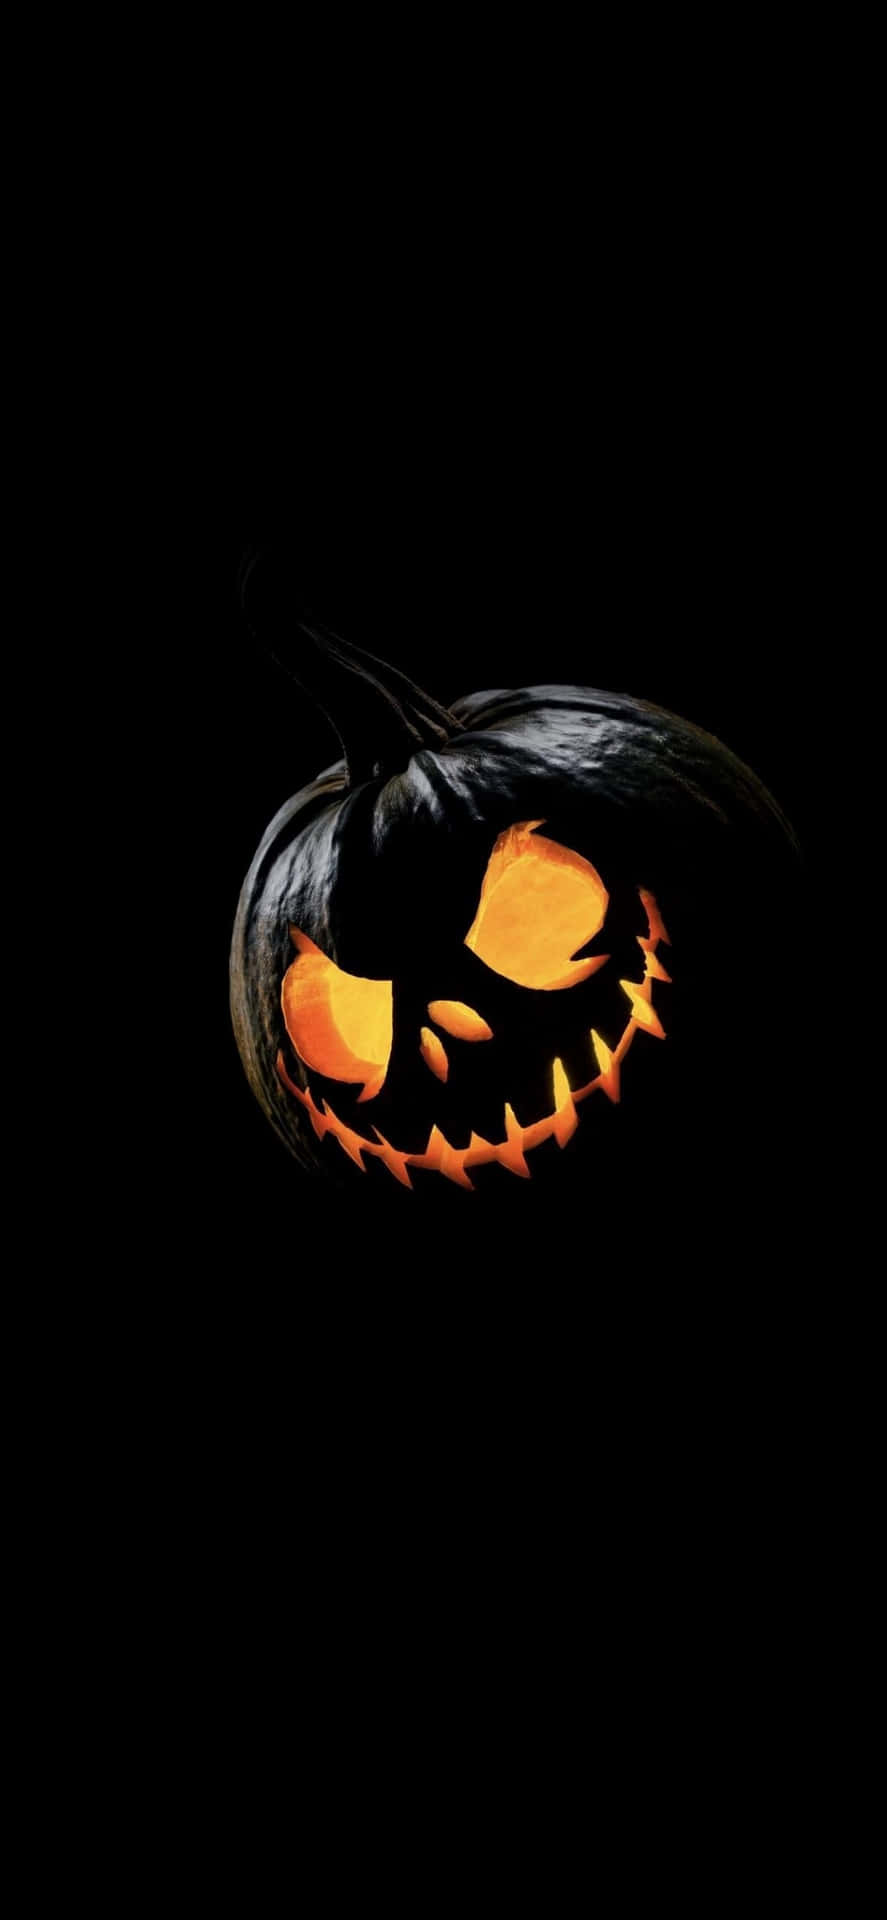 Spooky Halloween Pumpkin Lockscreen.jpg Wallpaper